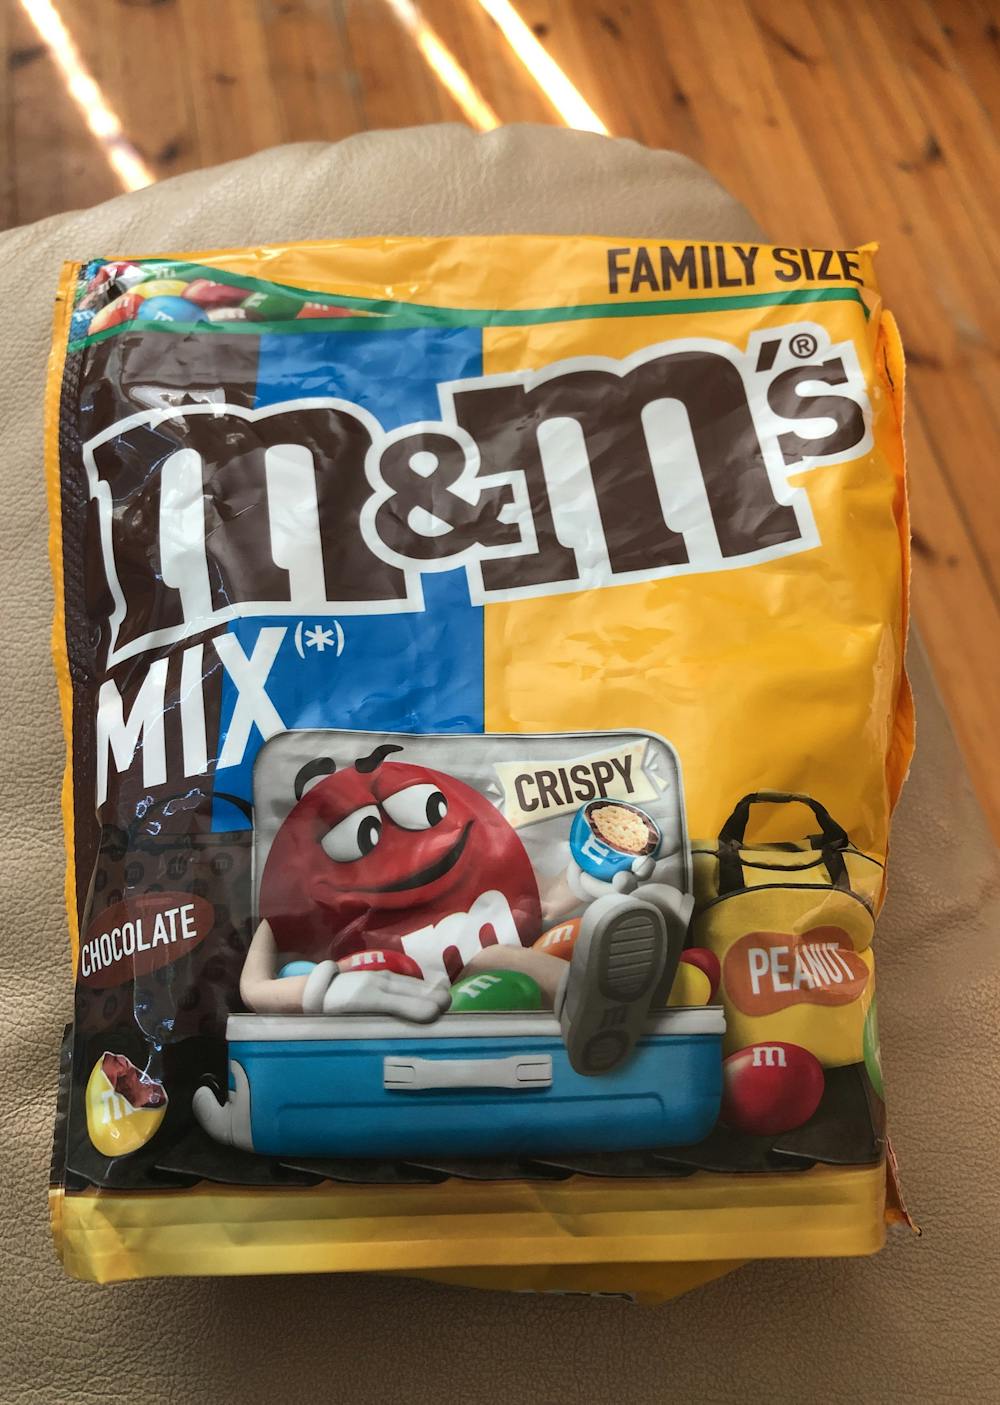 M&ms chocolate, family size mix, M&m